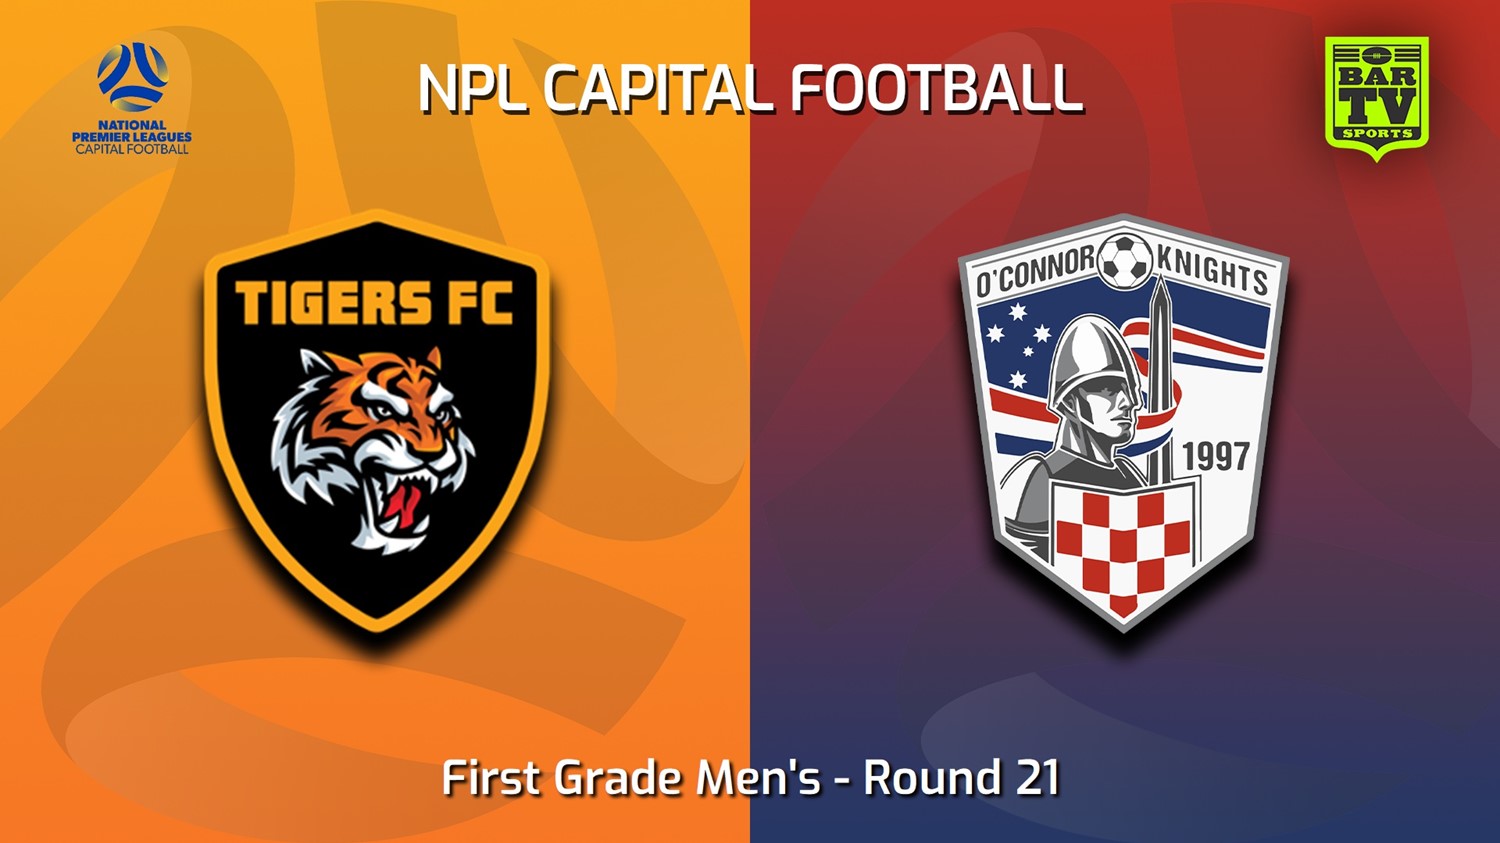 230902-Capital NPL Round 21 - Tigers FC v O'Connor Knights SC Minigame Slate Image